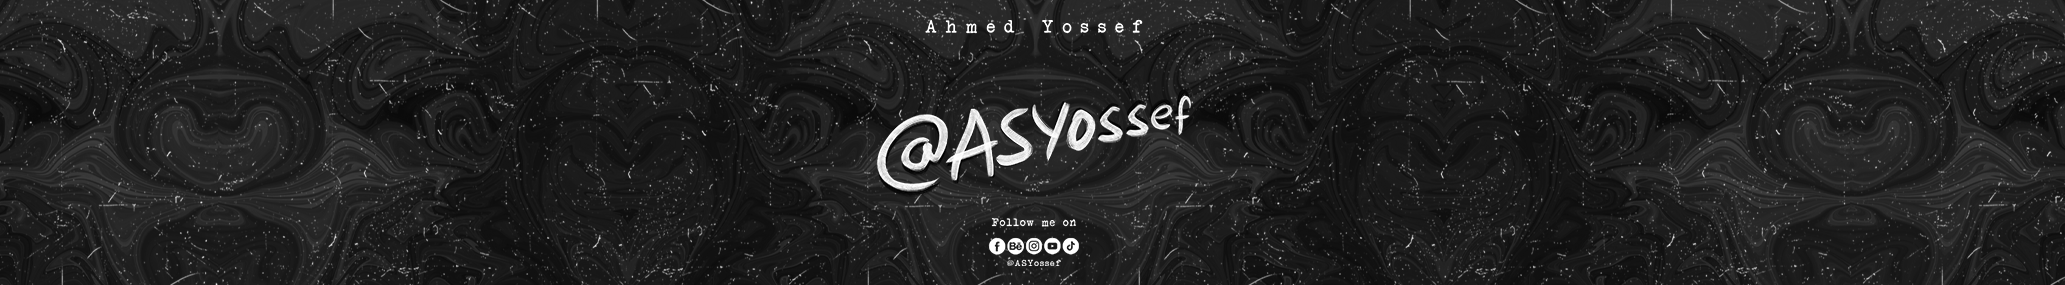 Ahmed S. Yossef profil başlığı